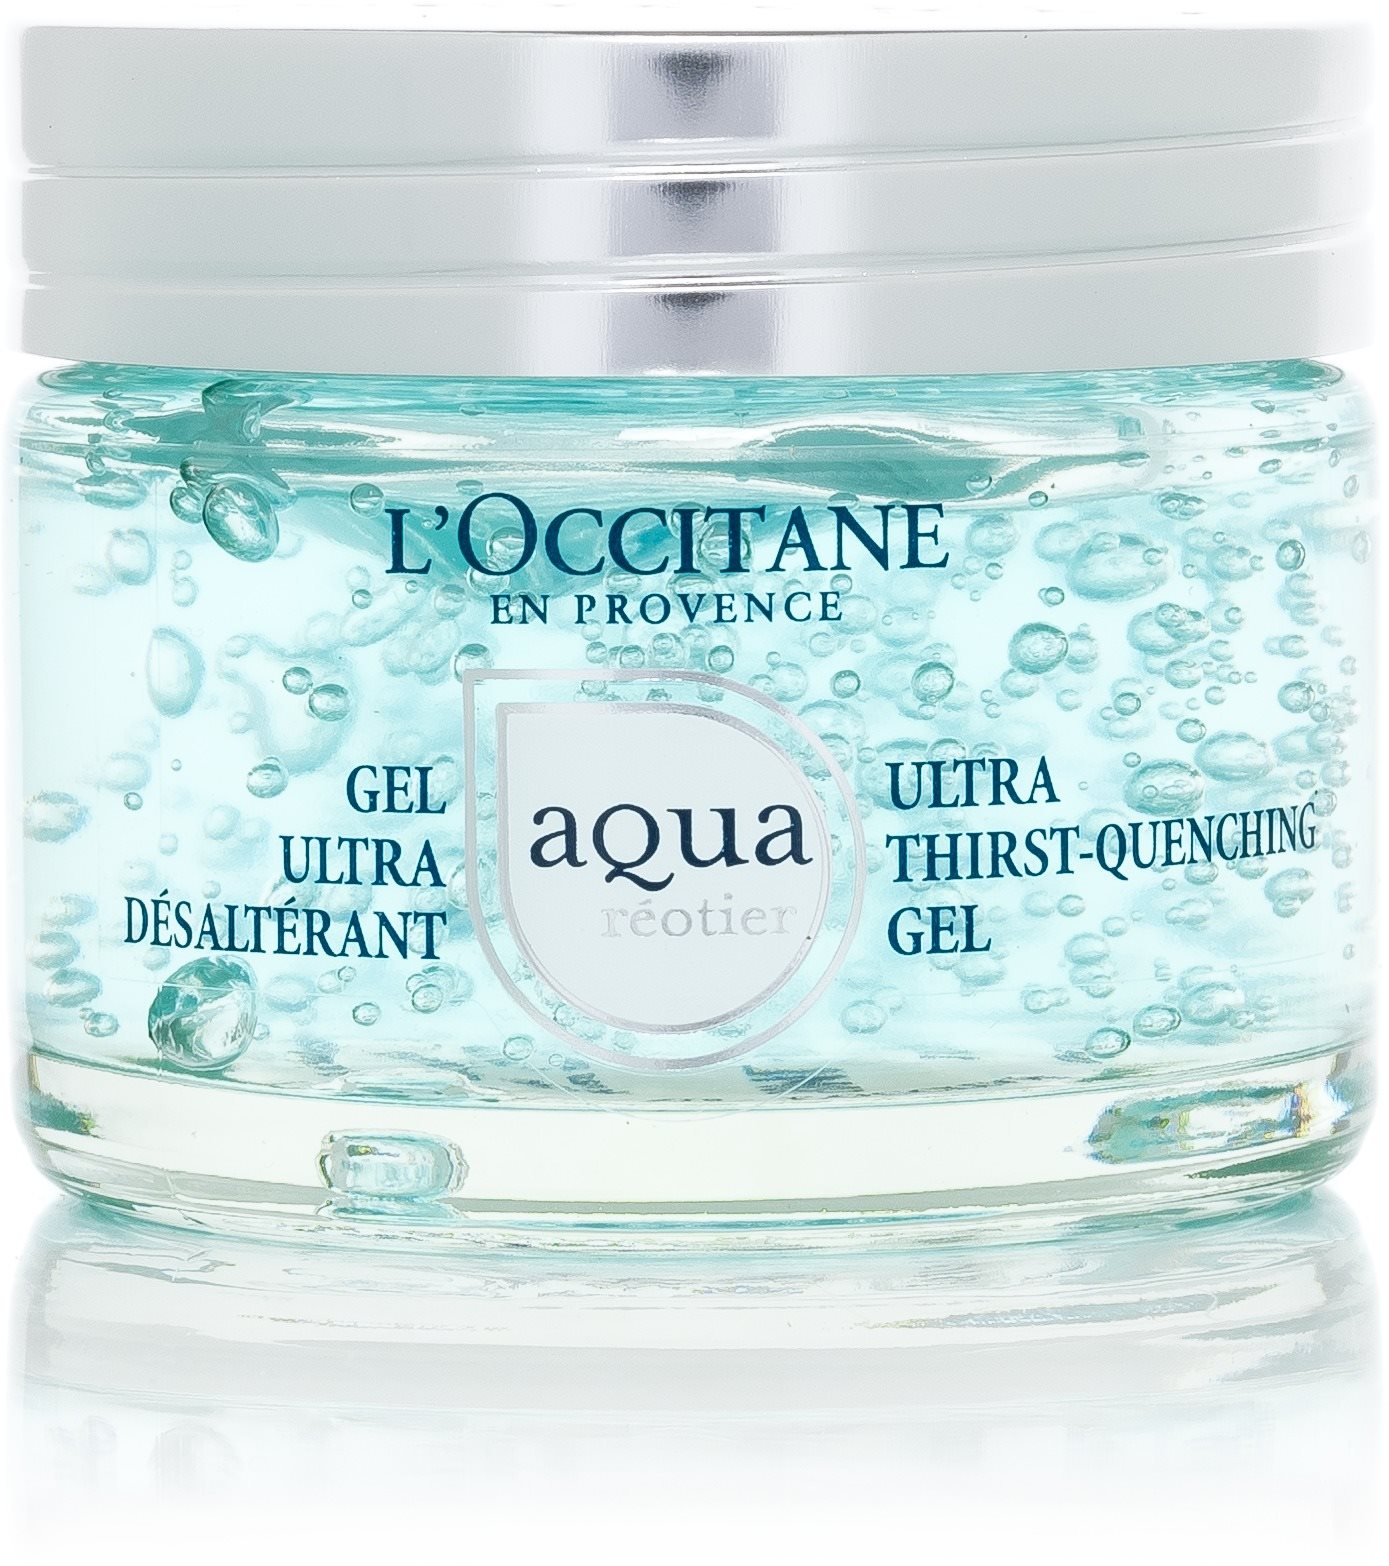 L'OCCITANE Aqua Réotier Ultra Thirst-Quenching Gel 50 ml